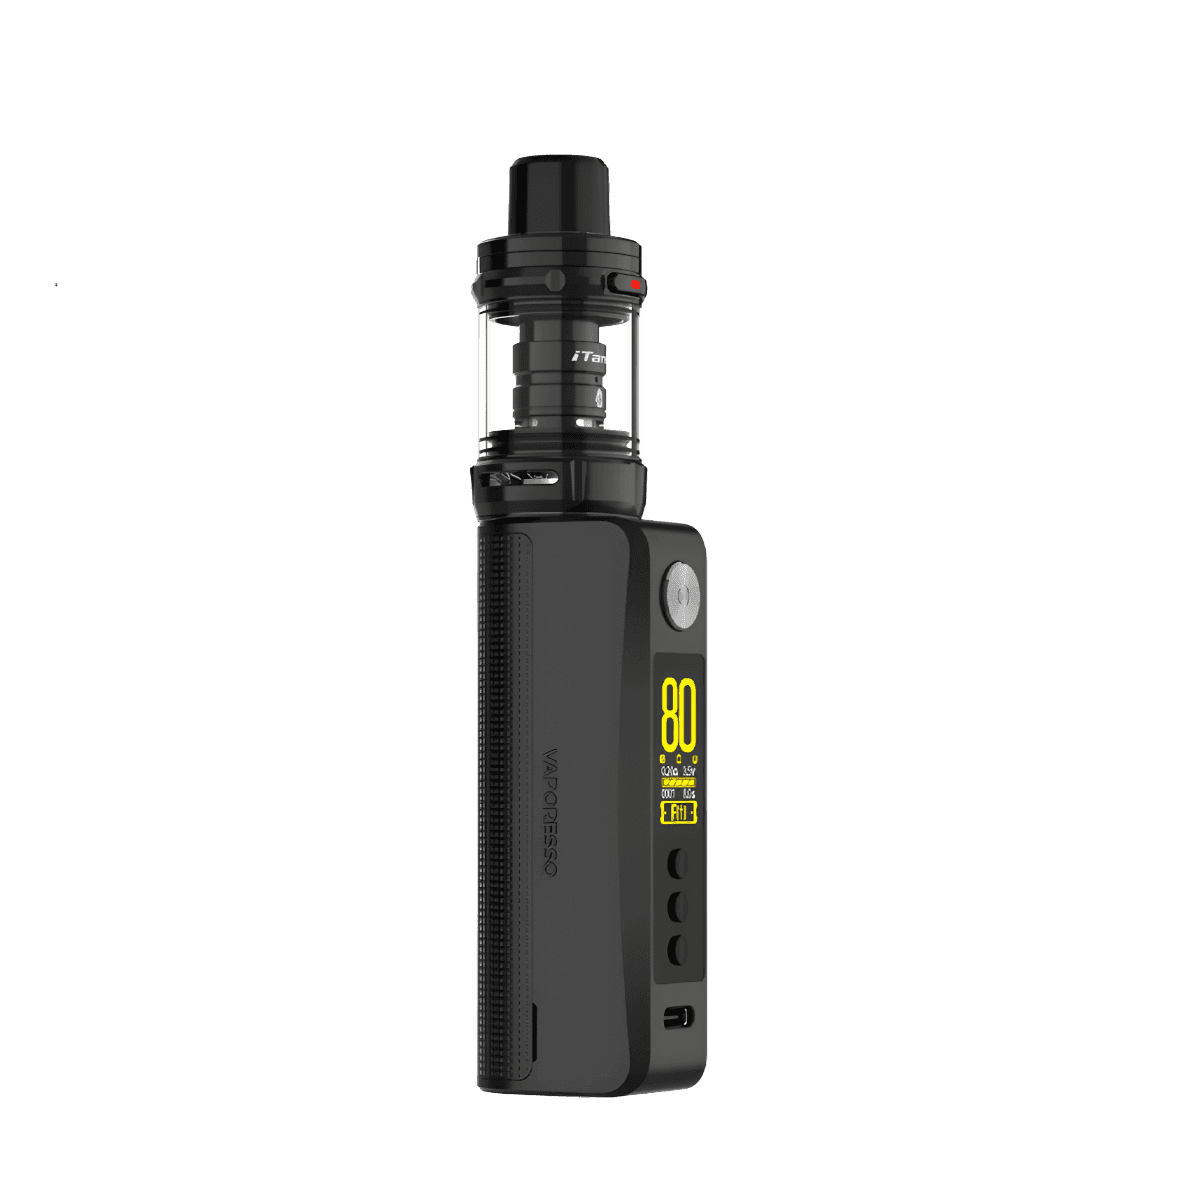 Vaporesso GEN 80S (ITank2) Advanced Mod Kit Black  